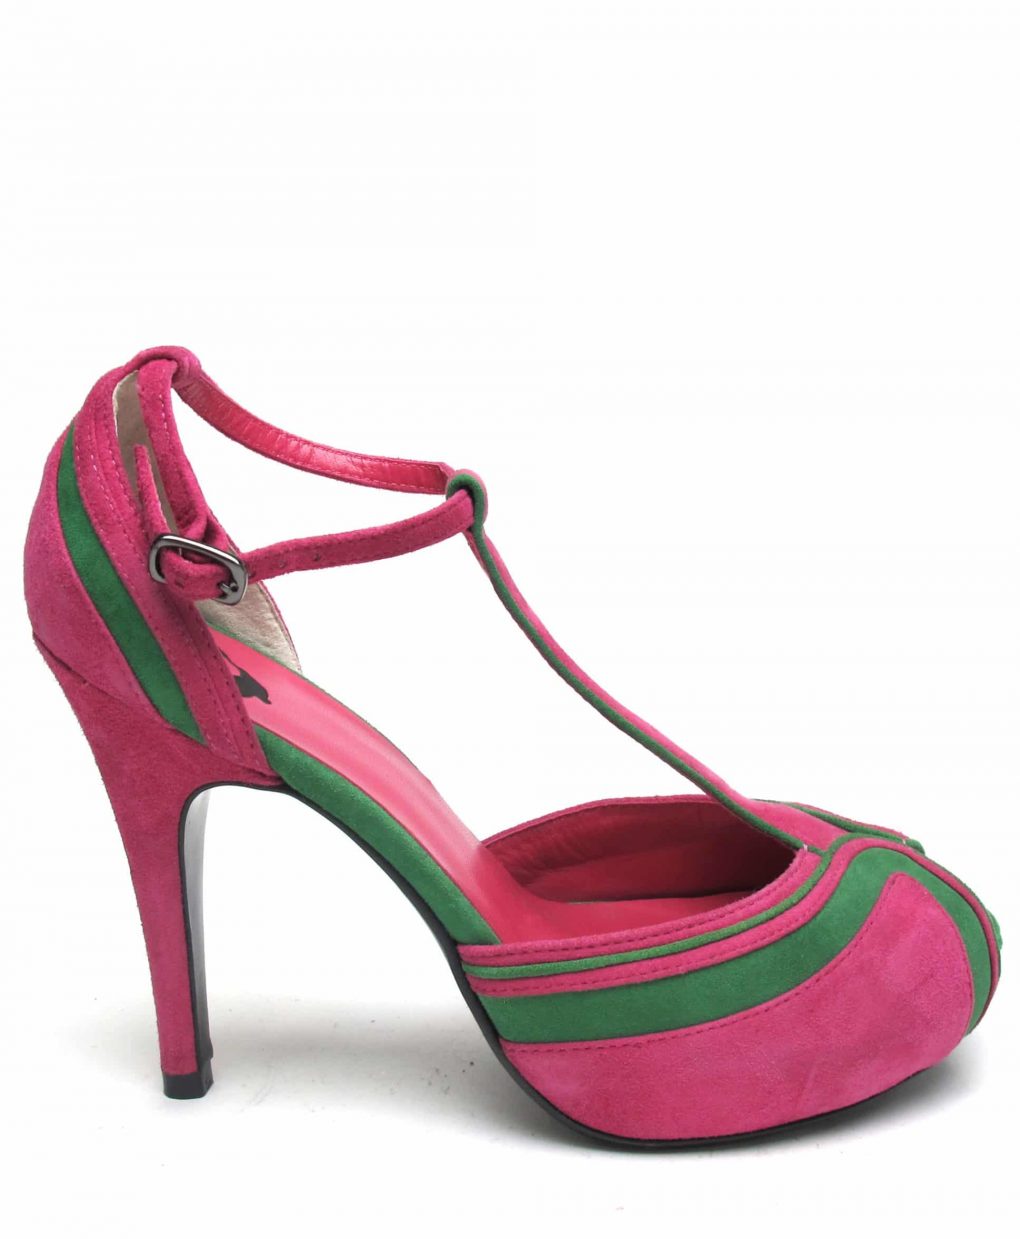 Tsuru Pink & Green T-bar open toe heels